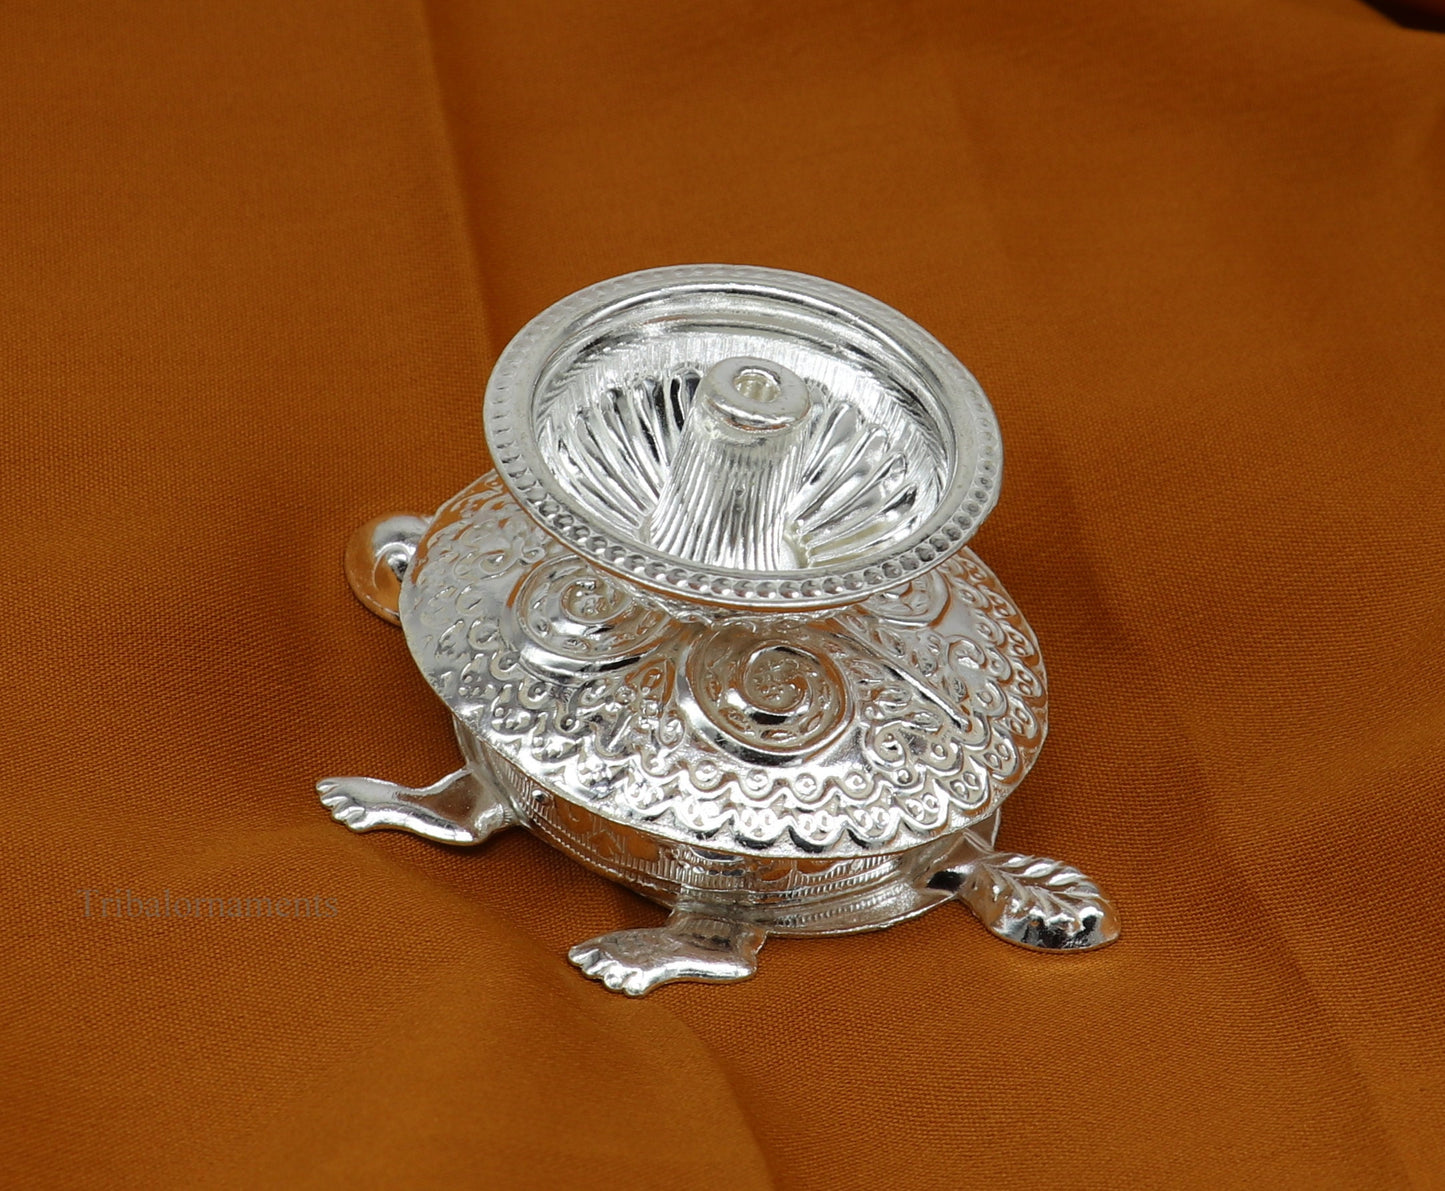 Diwali puja special solid silver handmade tortoise design oil lamp, silver deepak diya, silver temple utensils ,silver puja articles su414 - TRIBAL ORNAMENTS